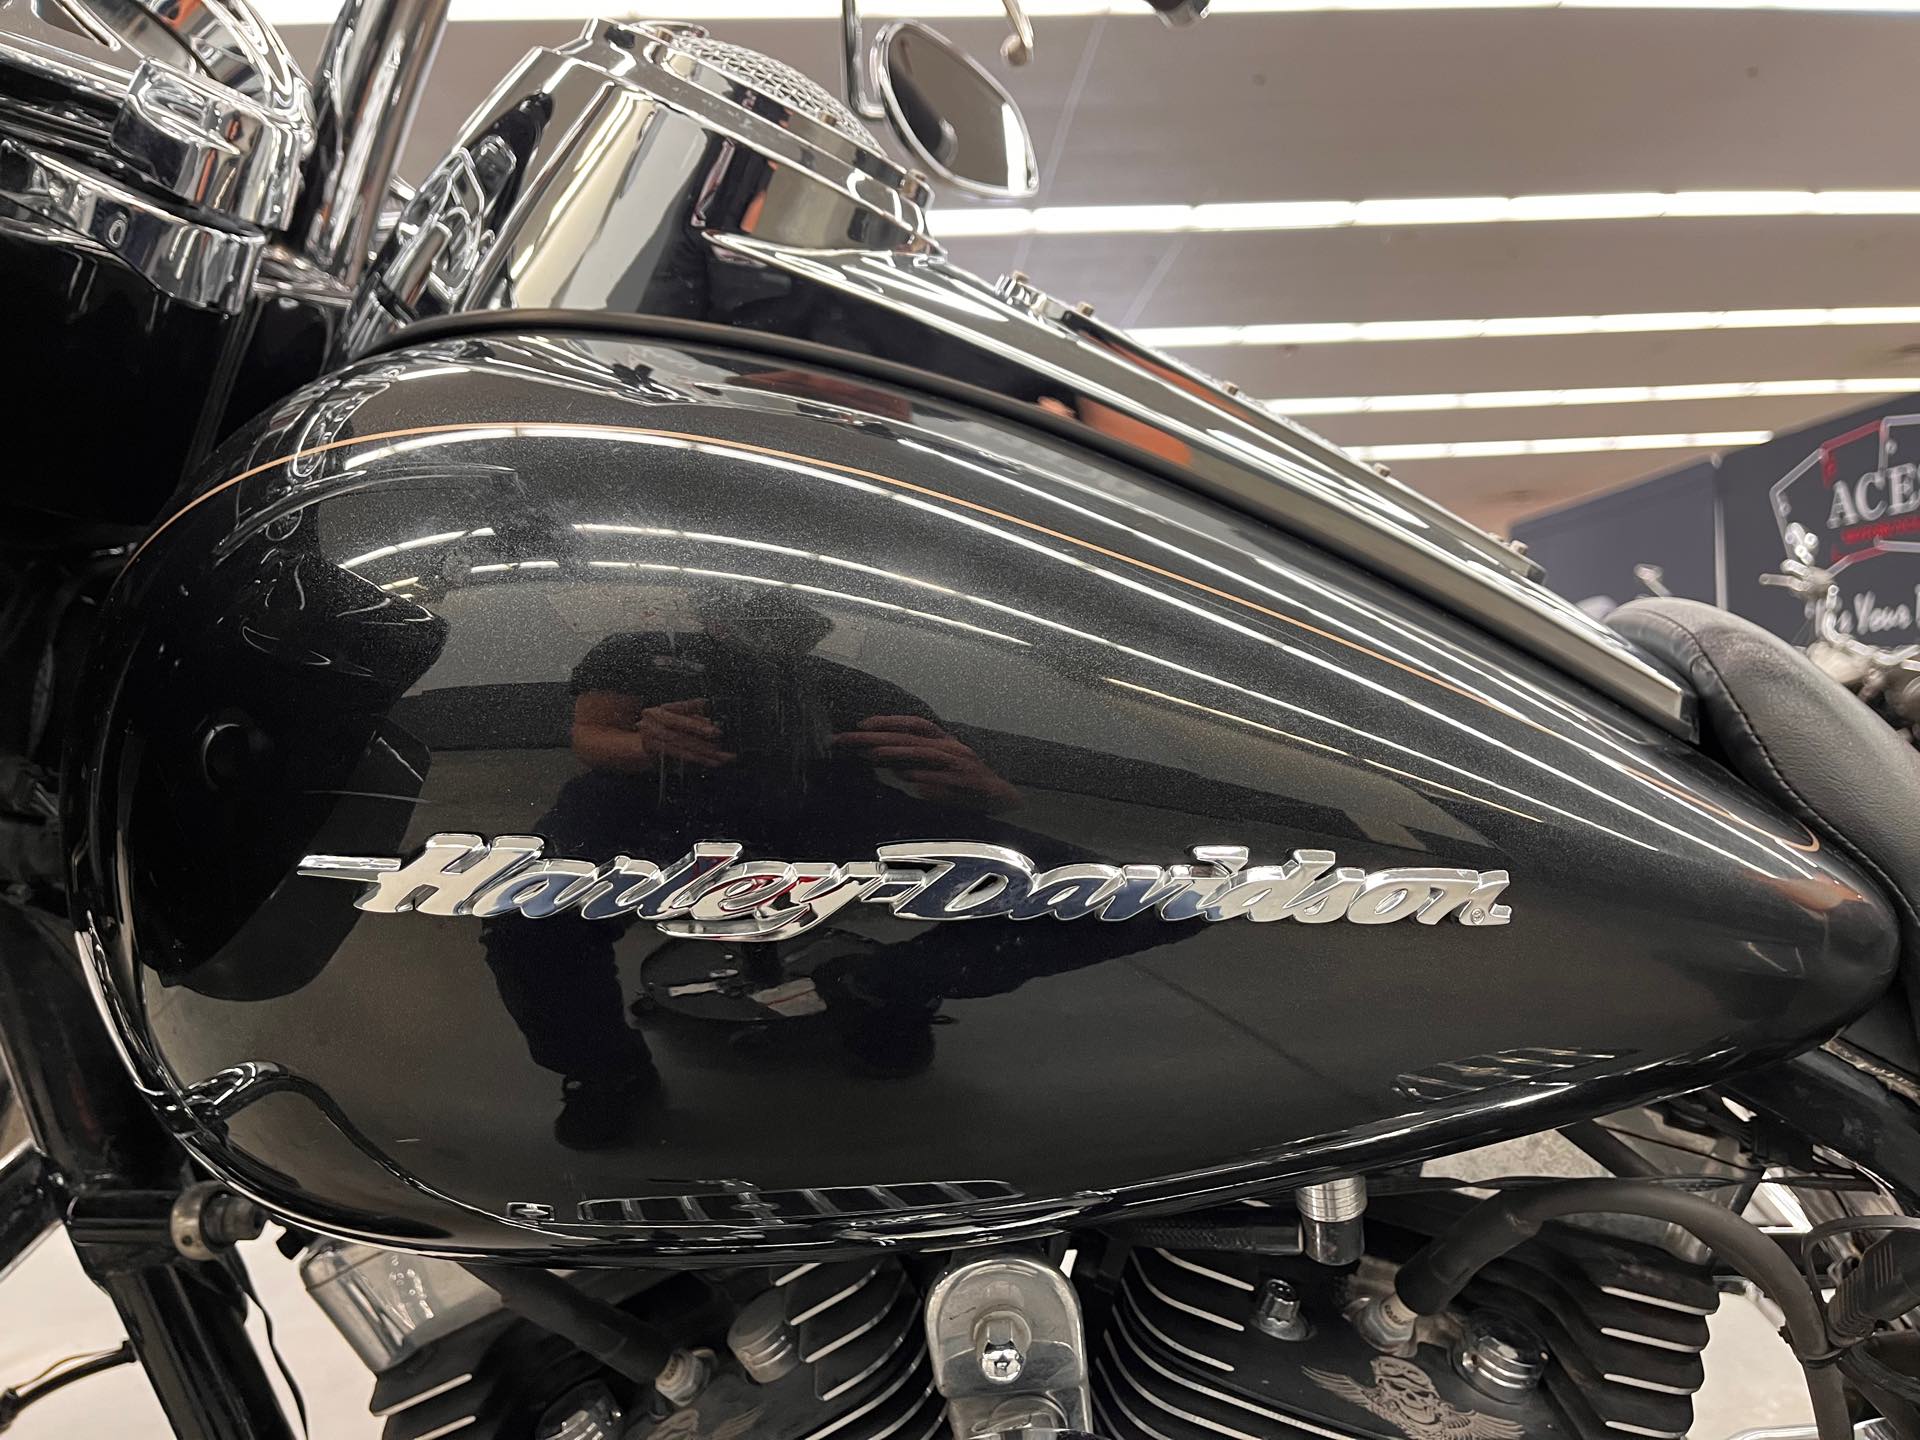 2016 Harley-Davidson Road Glide Special at Aces Motorcycles - Denver